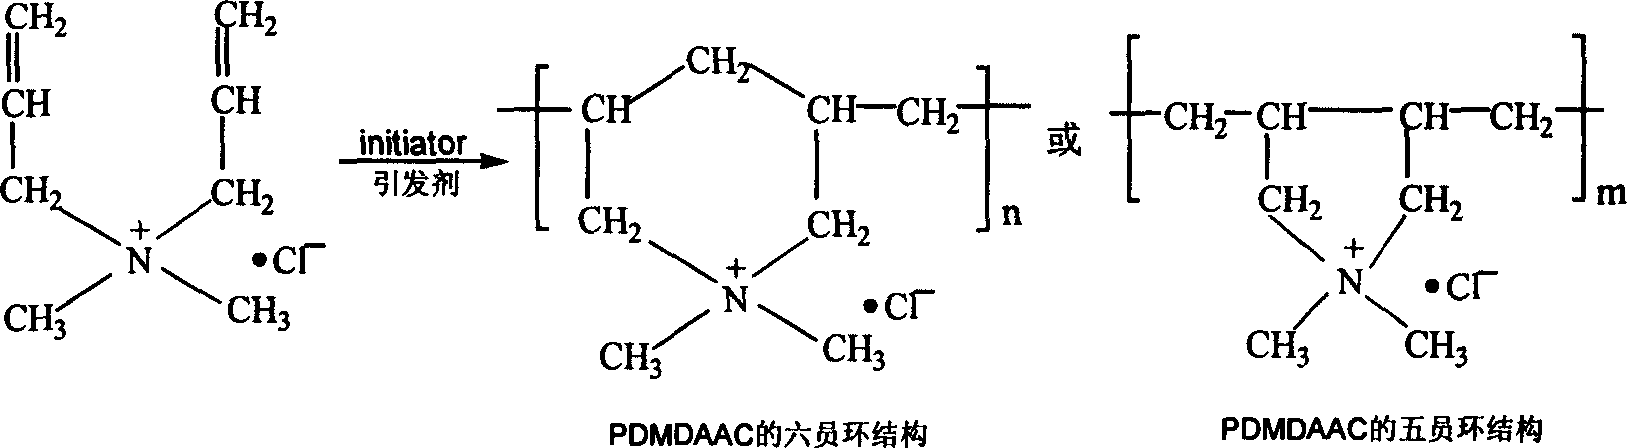 Preparation method of poly dimethyl allyl ammonium chloride